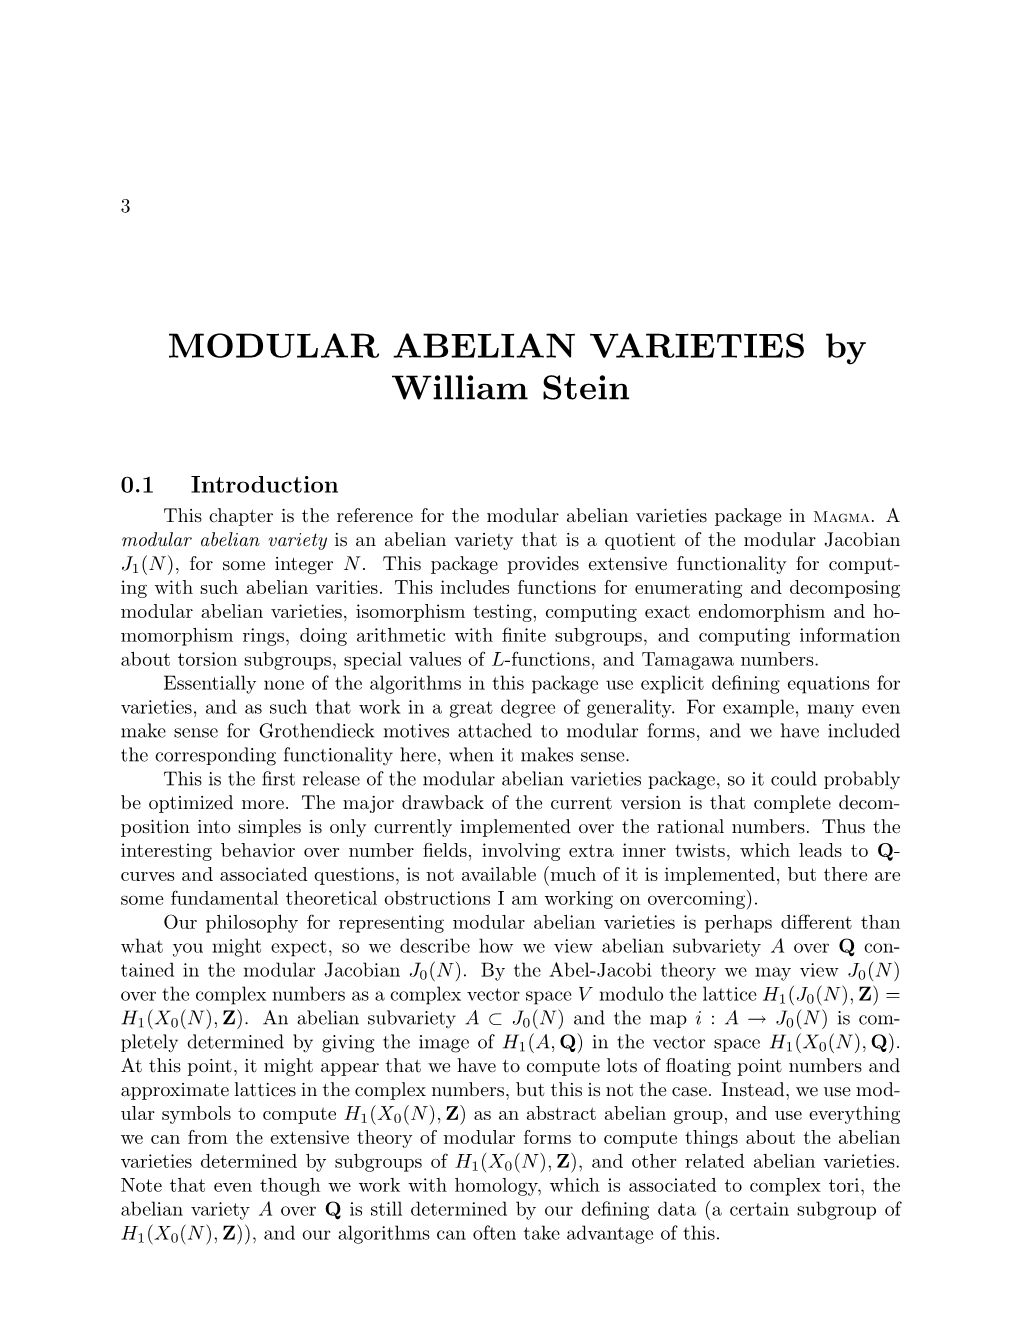 MODULAR ABELIAN VARIETIES by William Stein